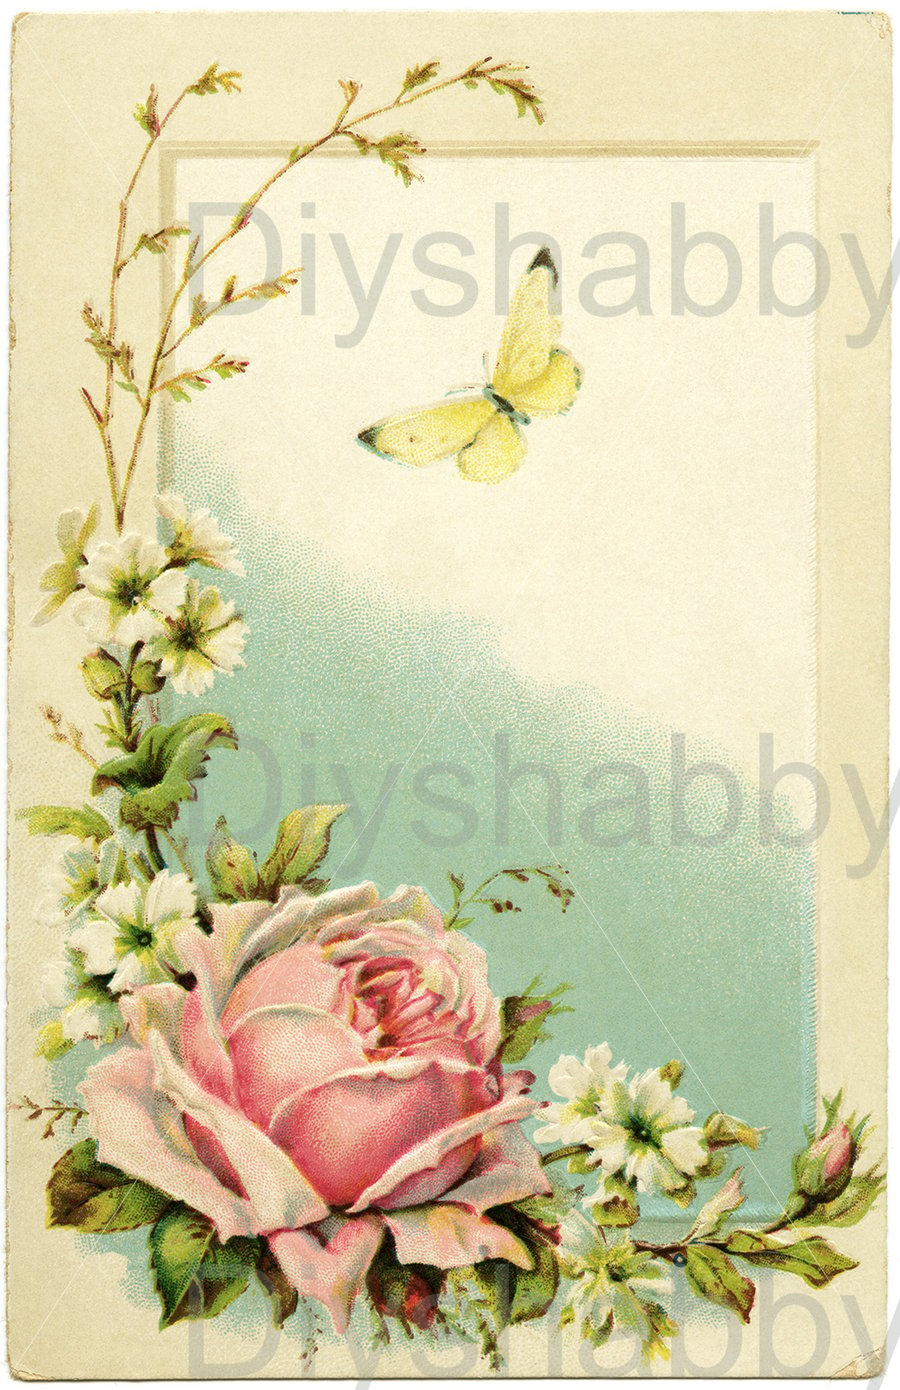 Waterslide Wood Furniture Decal Vintage Image Transfer Shabby Chic Pastel Rose